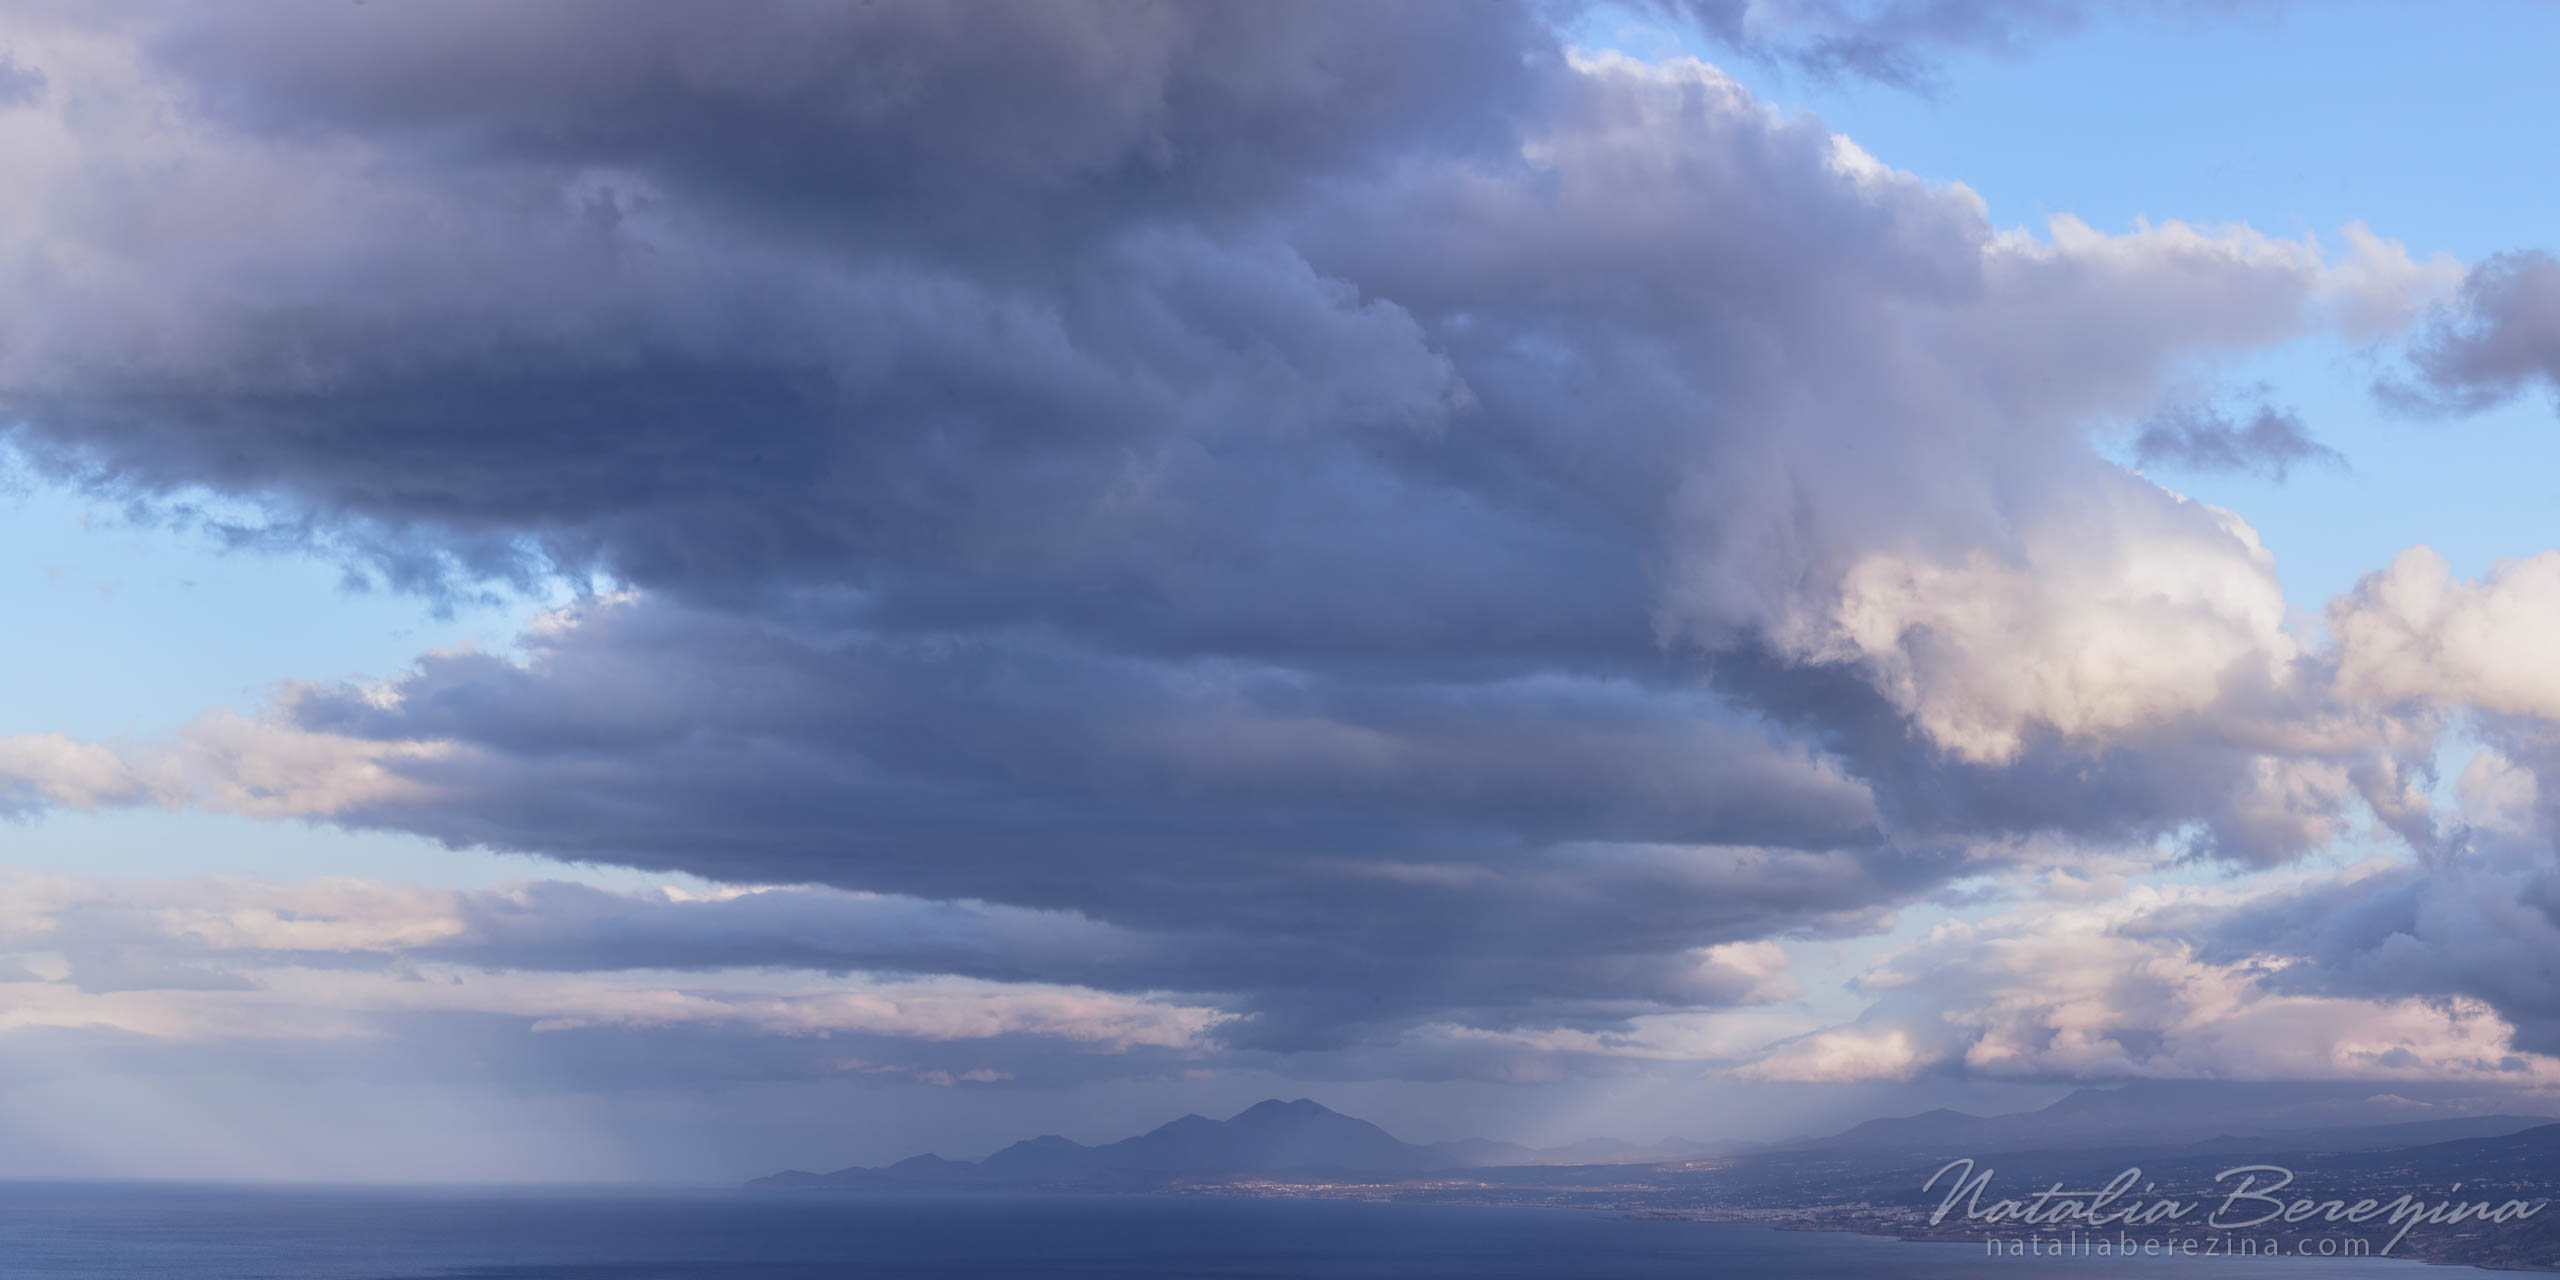 Greece, Crete, landscape, cloud, sunlight, skyline, 2x1 CR1-NB0B4A9040-P - Crete, Greece - Natalia Berezina Photography